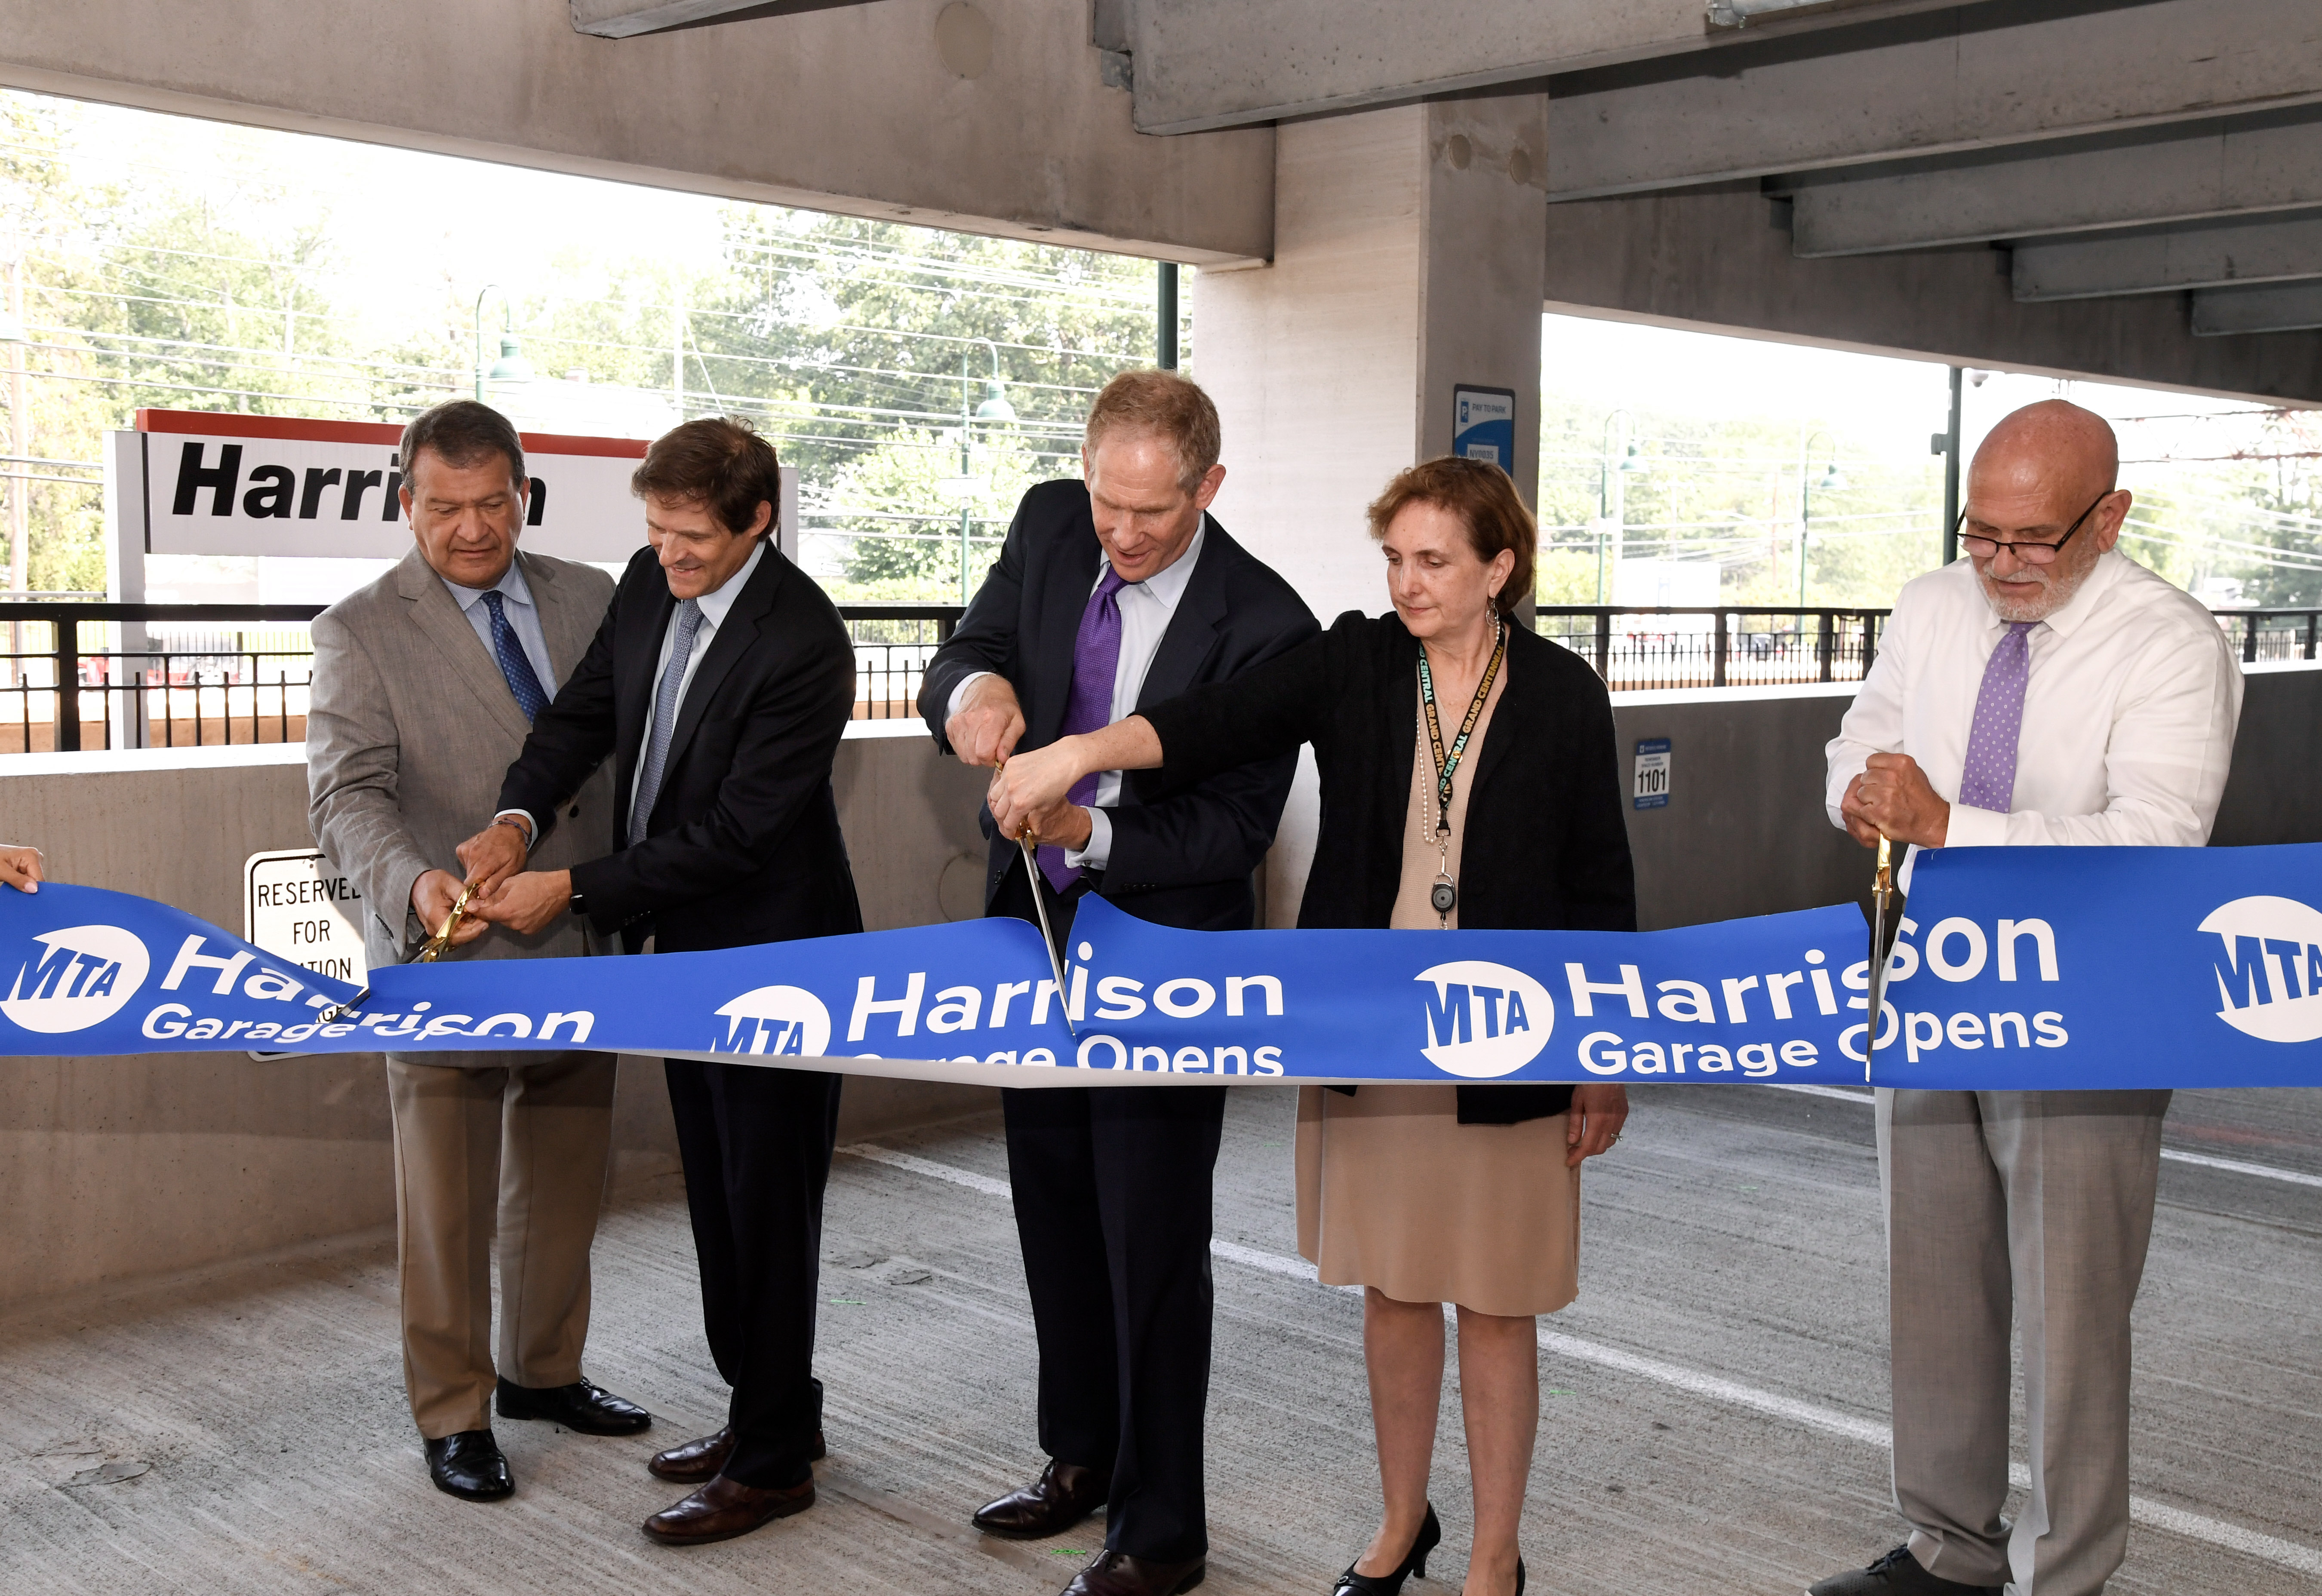 MTA Celebrates Grand Opening of Commuter Parking Garage at Metro-North Harrison Station